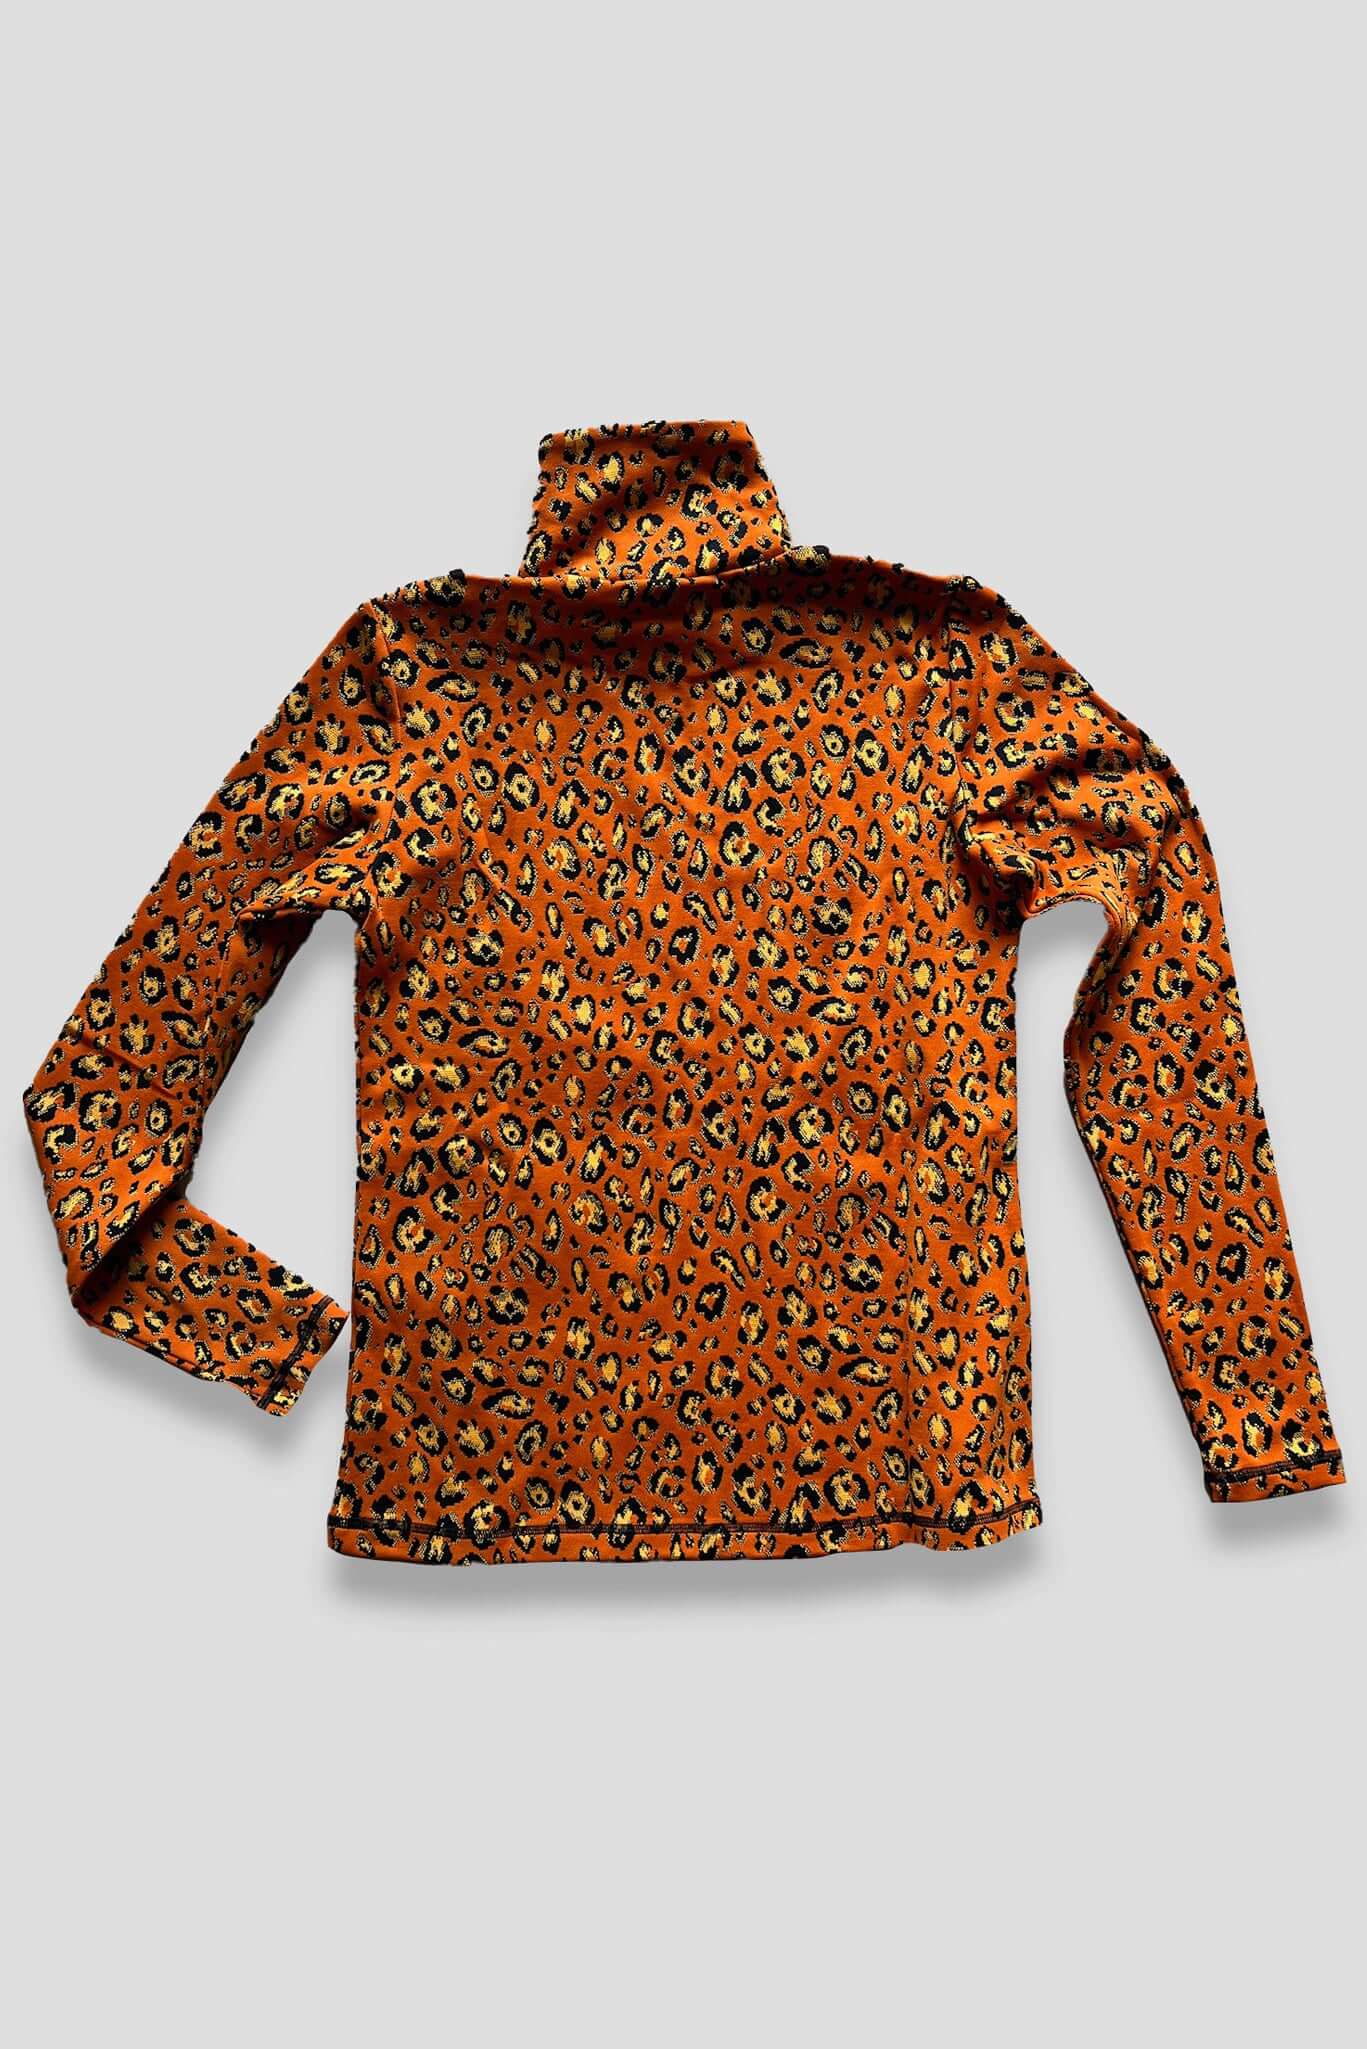 Socco undershirt in ocre leopard jersey